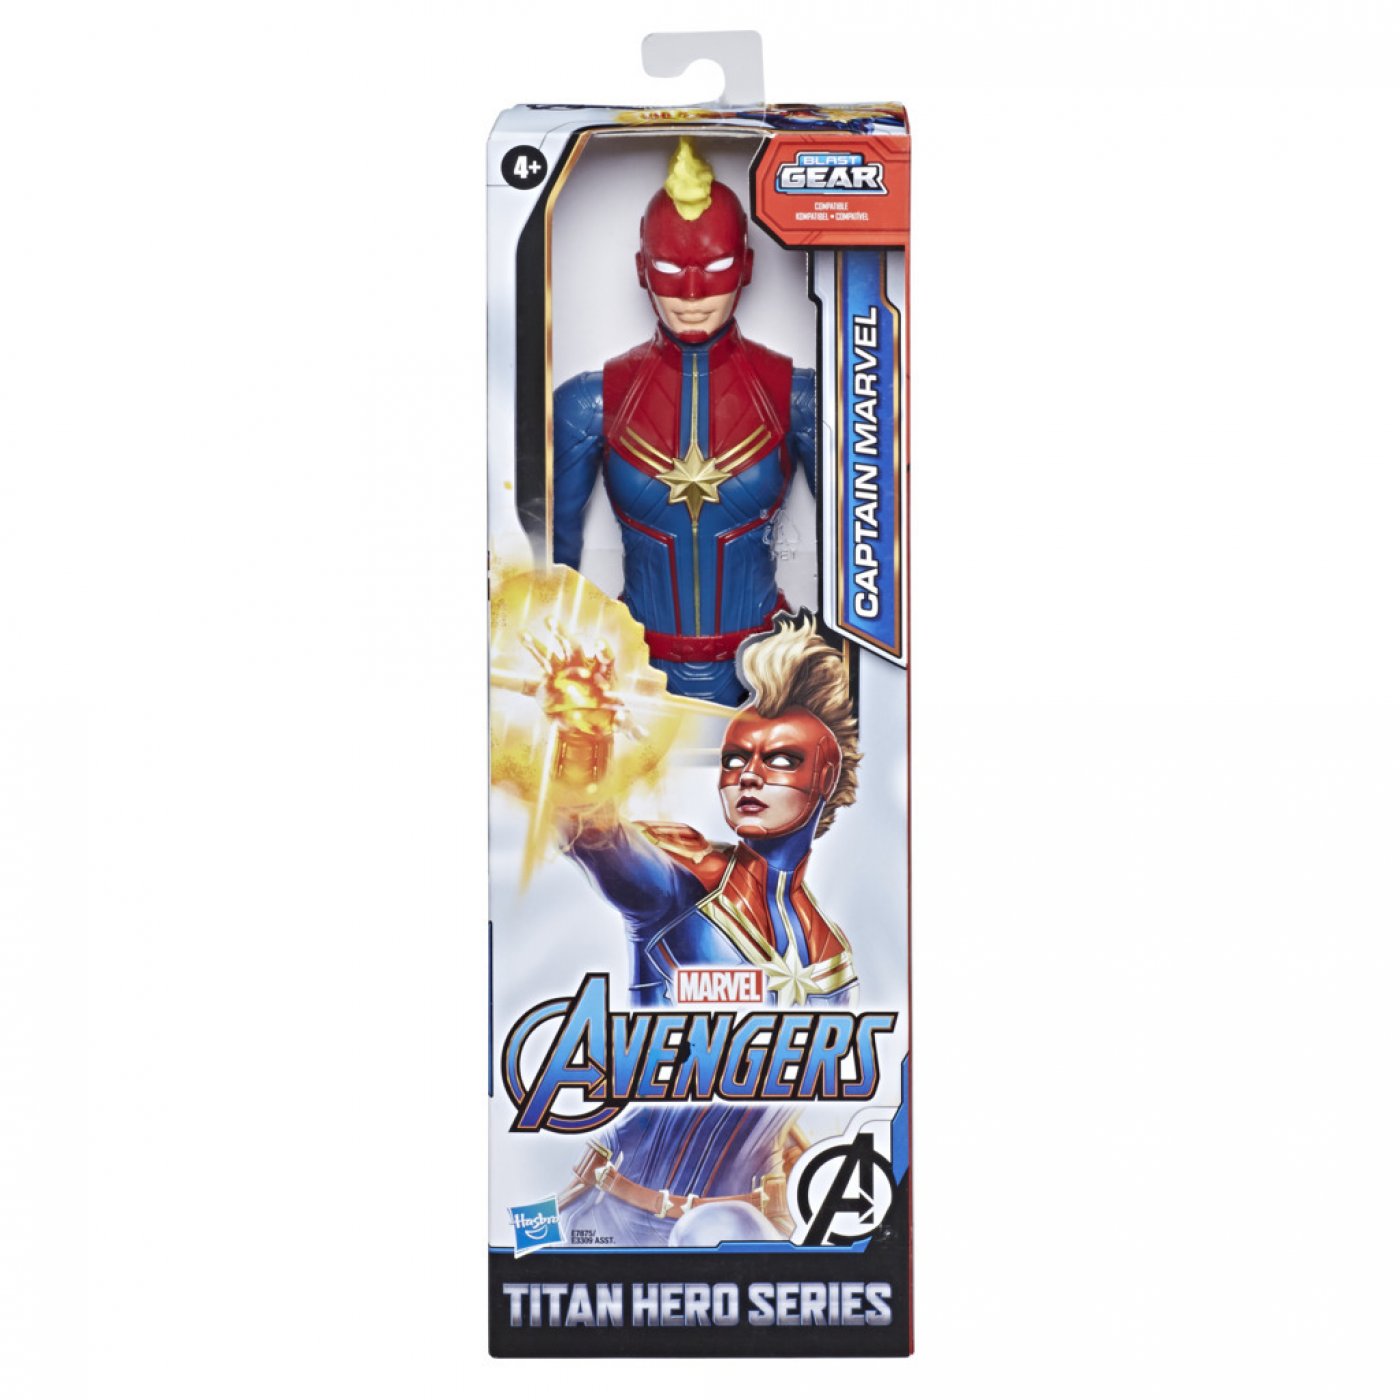 Capitana Marvel Titan Hero Series Avengers 